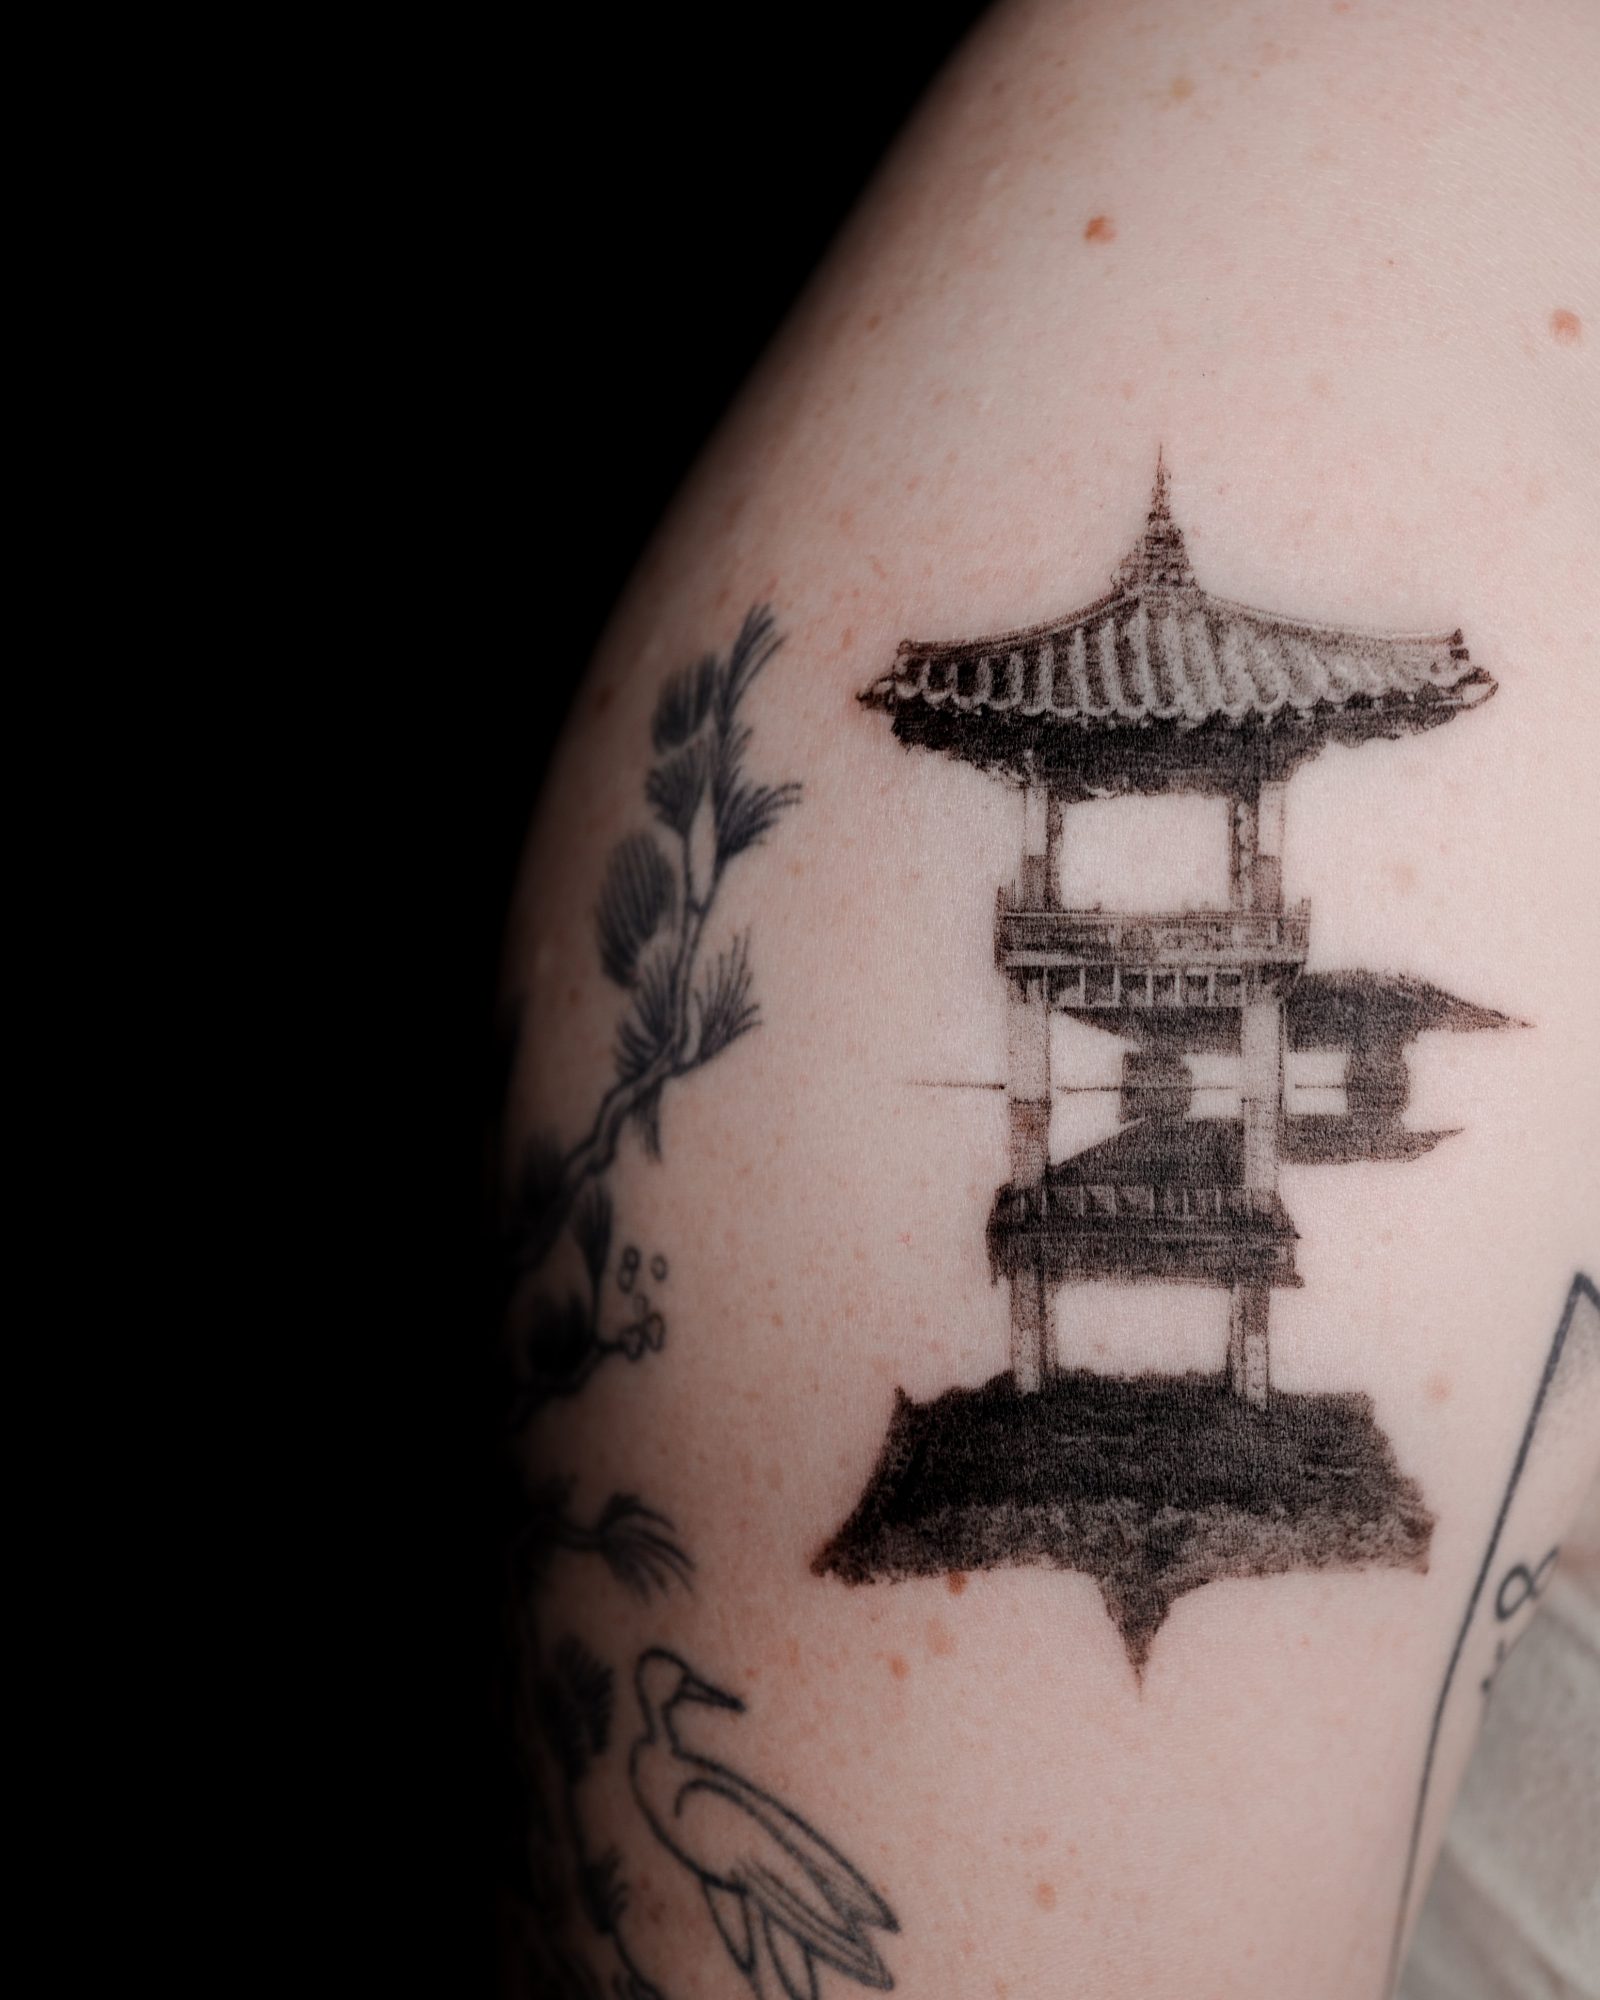 Tattoo uploaded by Anatta Vela • Tattoo by Soren Sangkuhl #SorenSangkuhl # japanese #neojapanese #pagoda #cherryblossoms #landscape #nature • Tattoodo